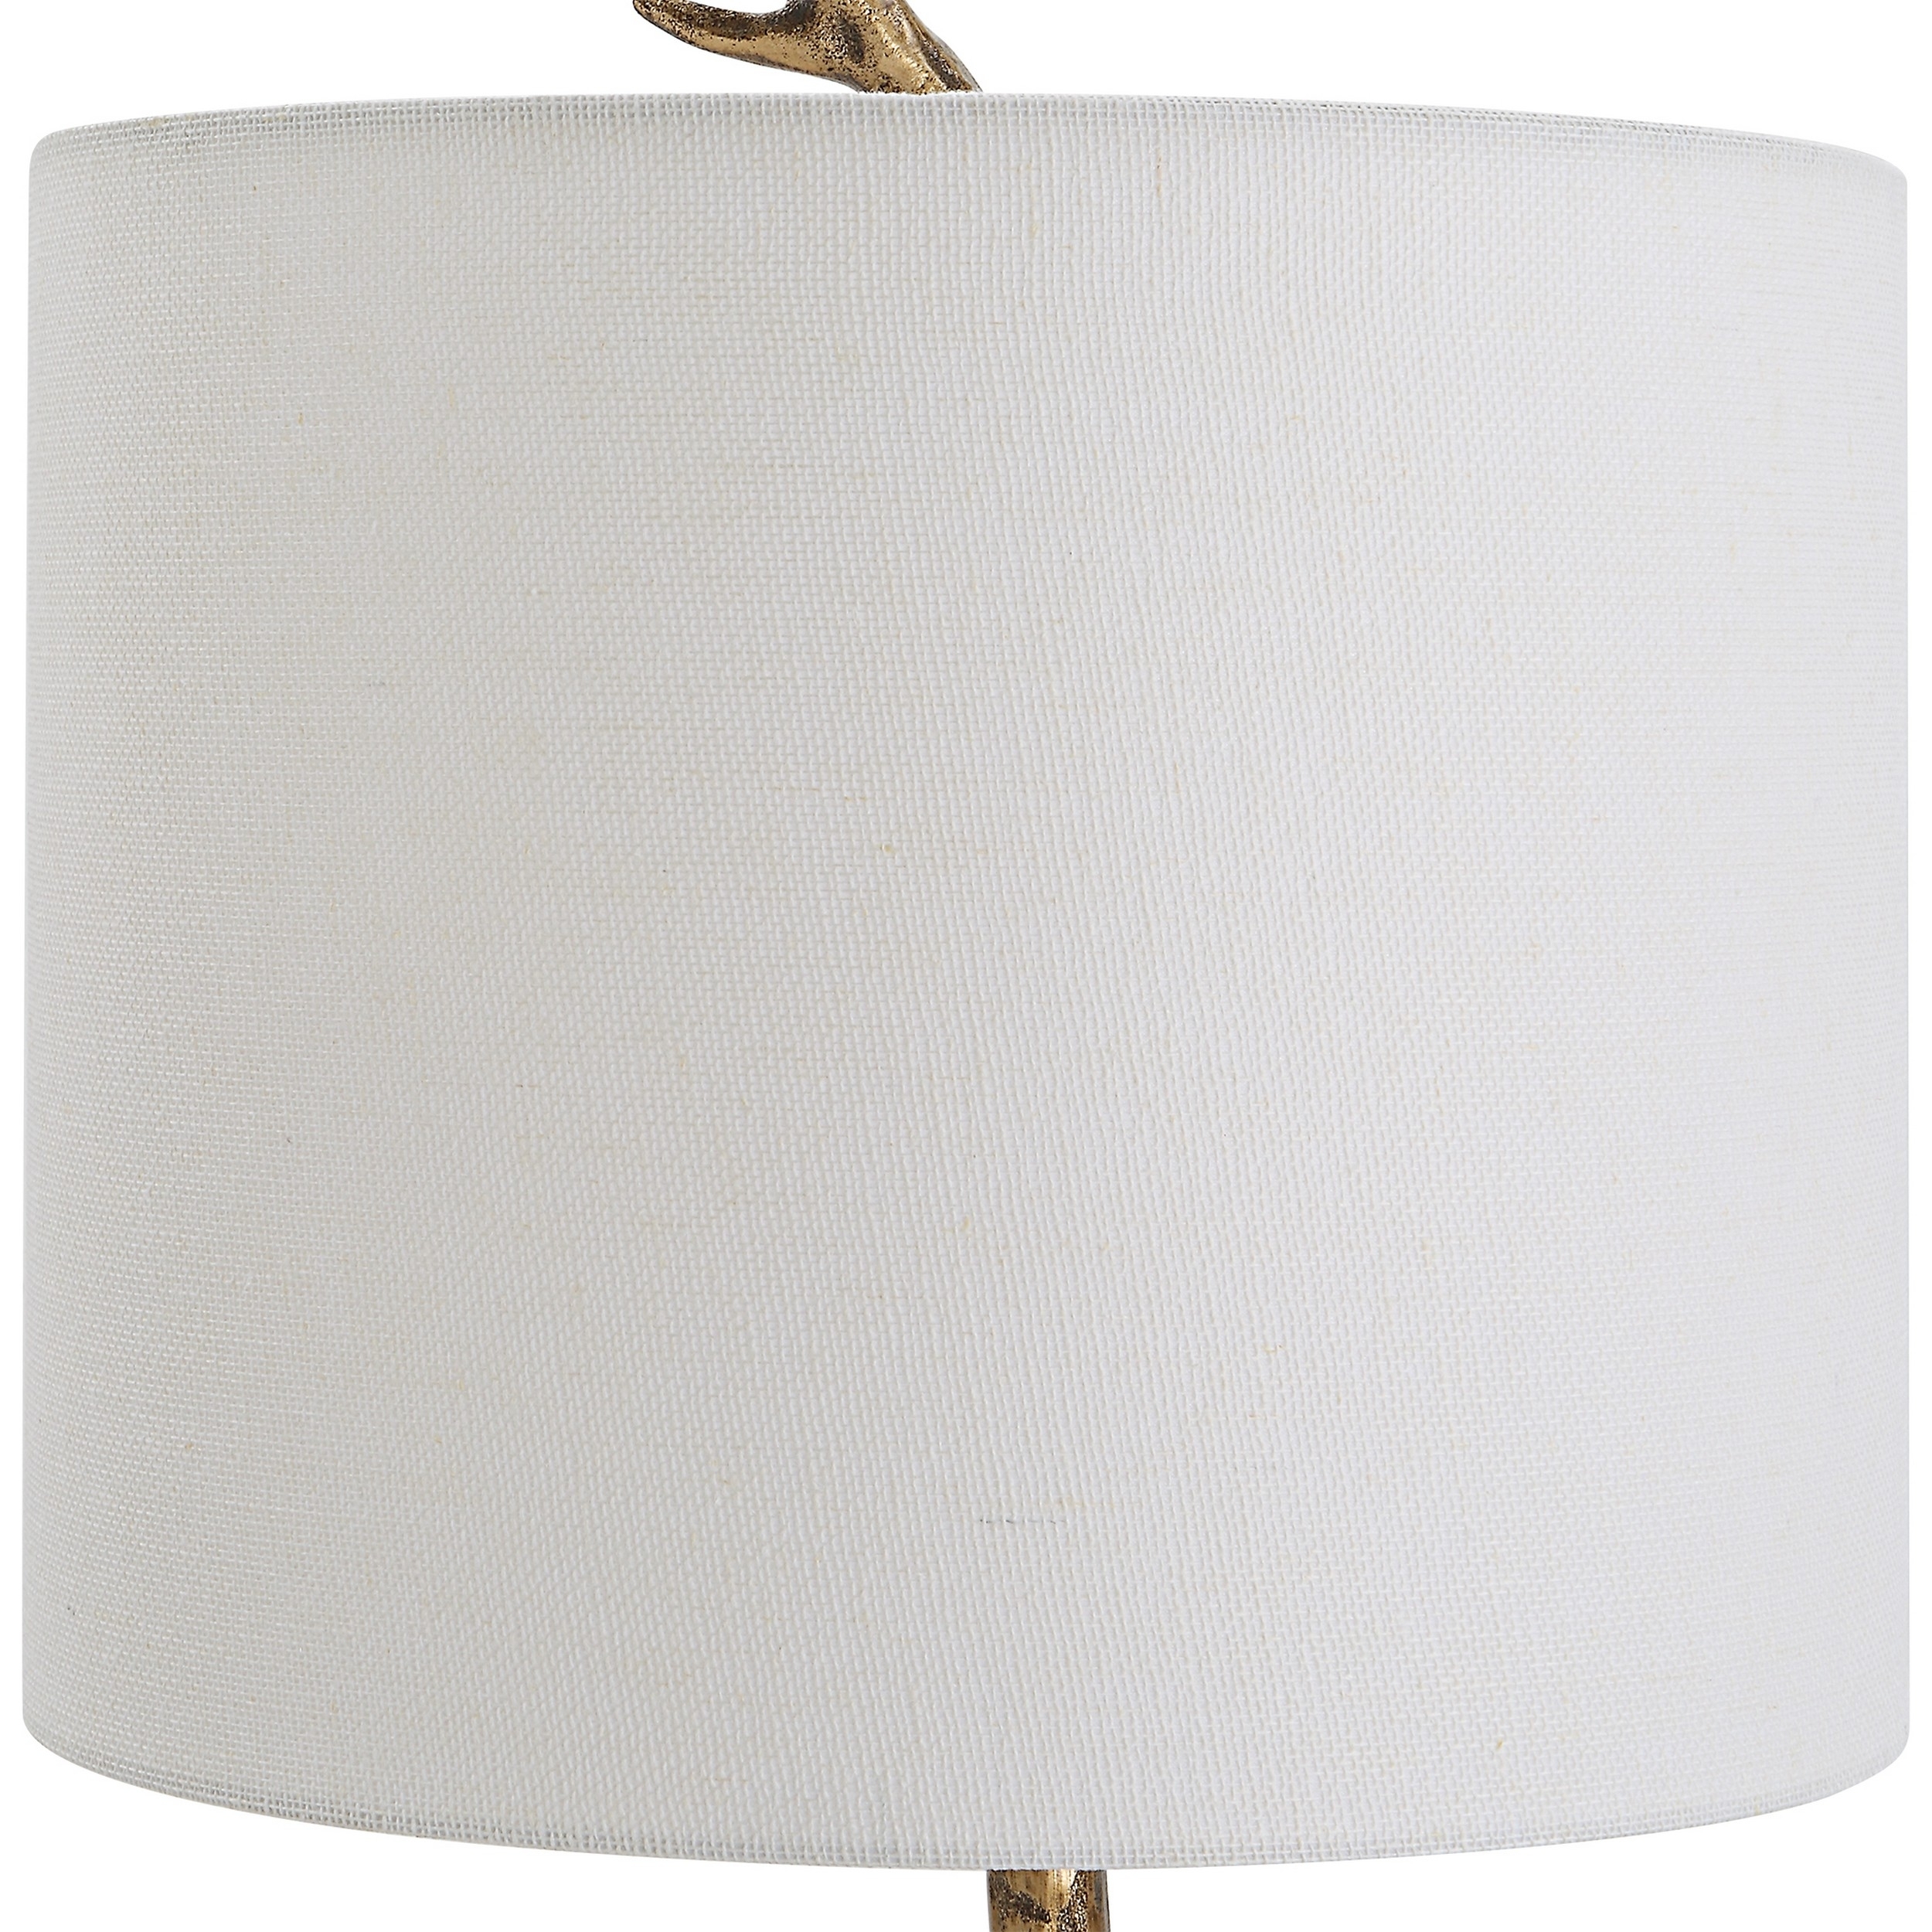 30 Inch Table Lamp, White Round Hardback Drum Shade, Antique Gold Base -Saltoro Sherpi